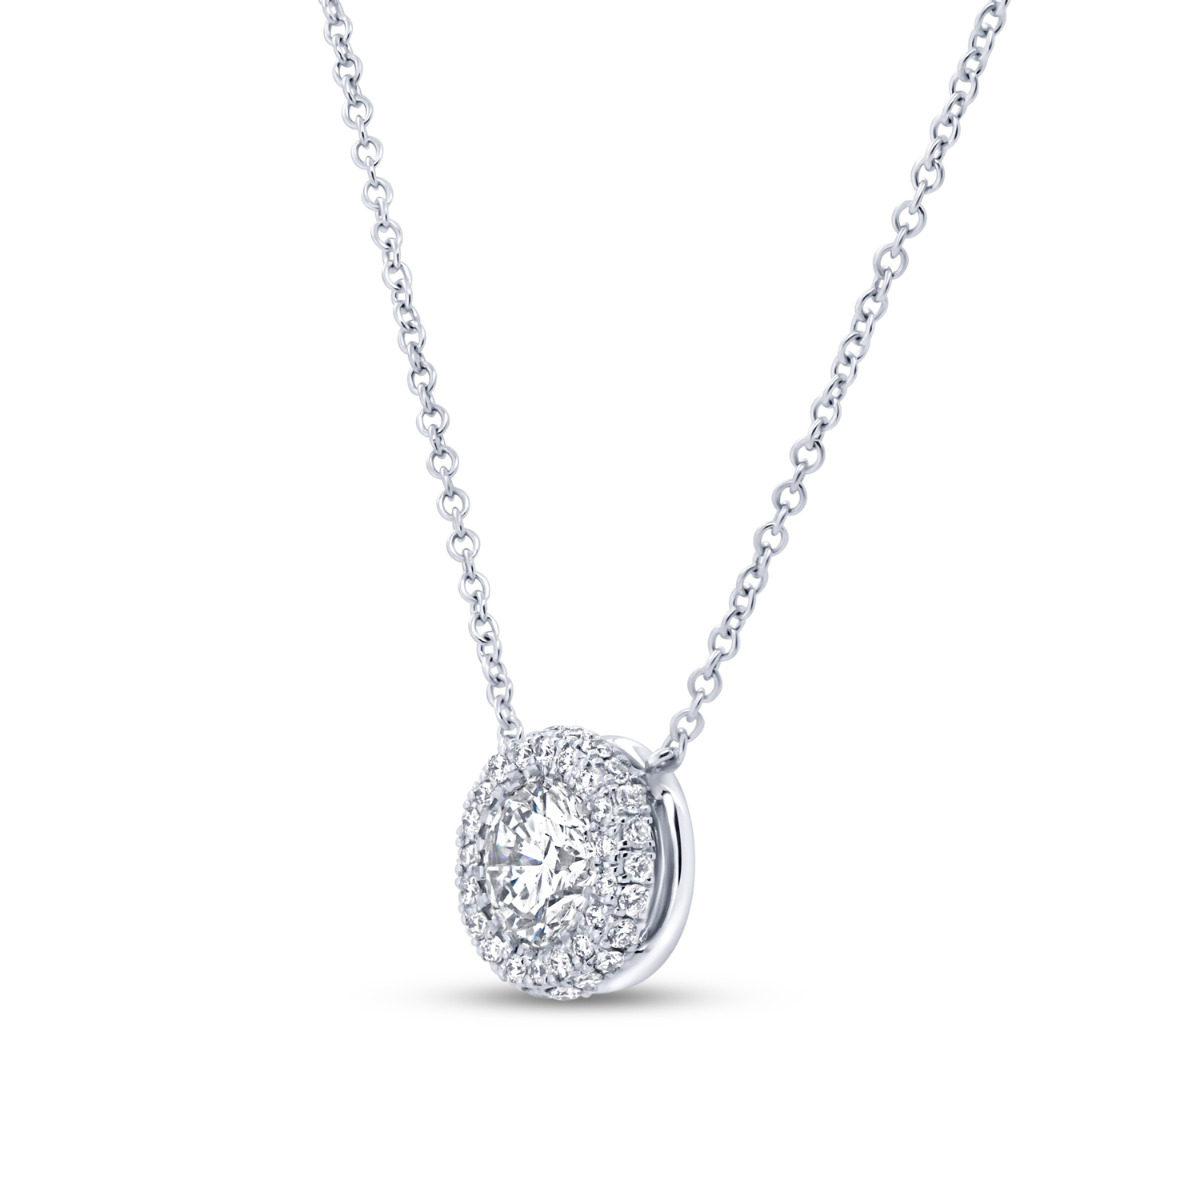 Uneek Jewelry Diamond Pendant Necklace in 18kt White Gold